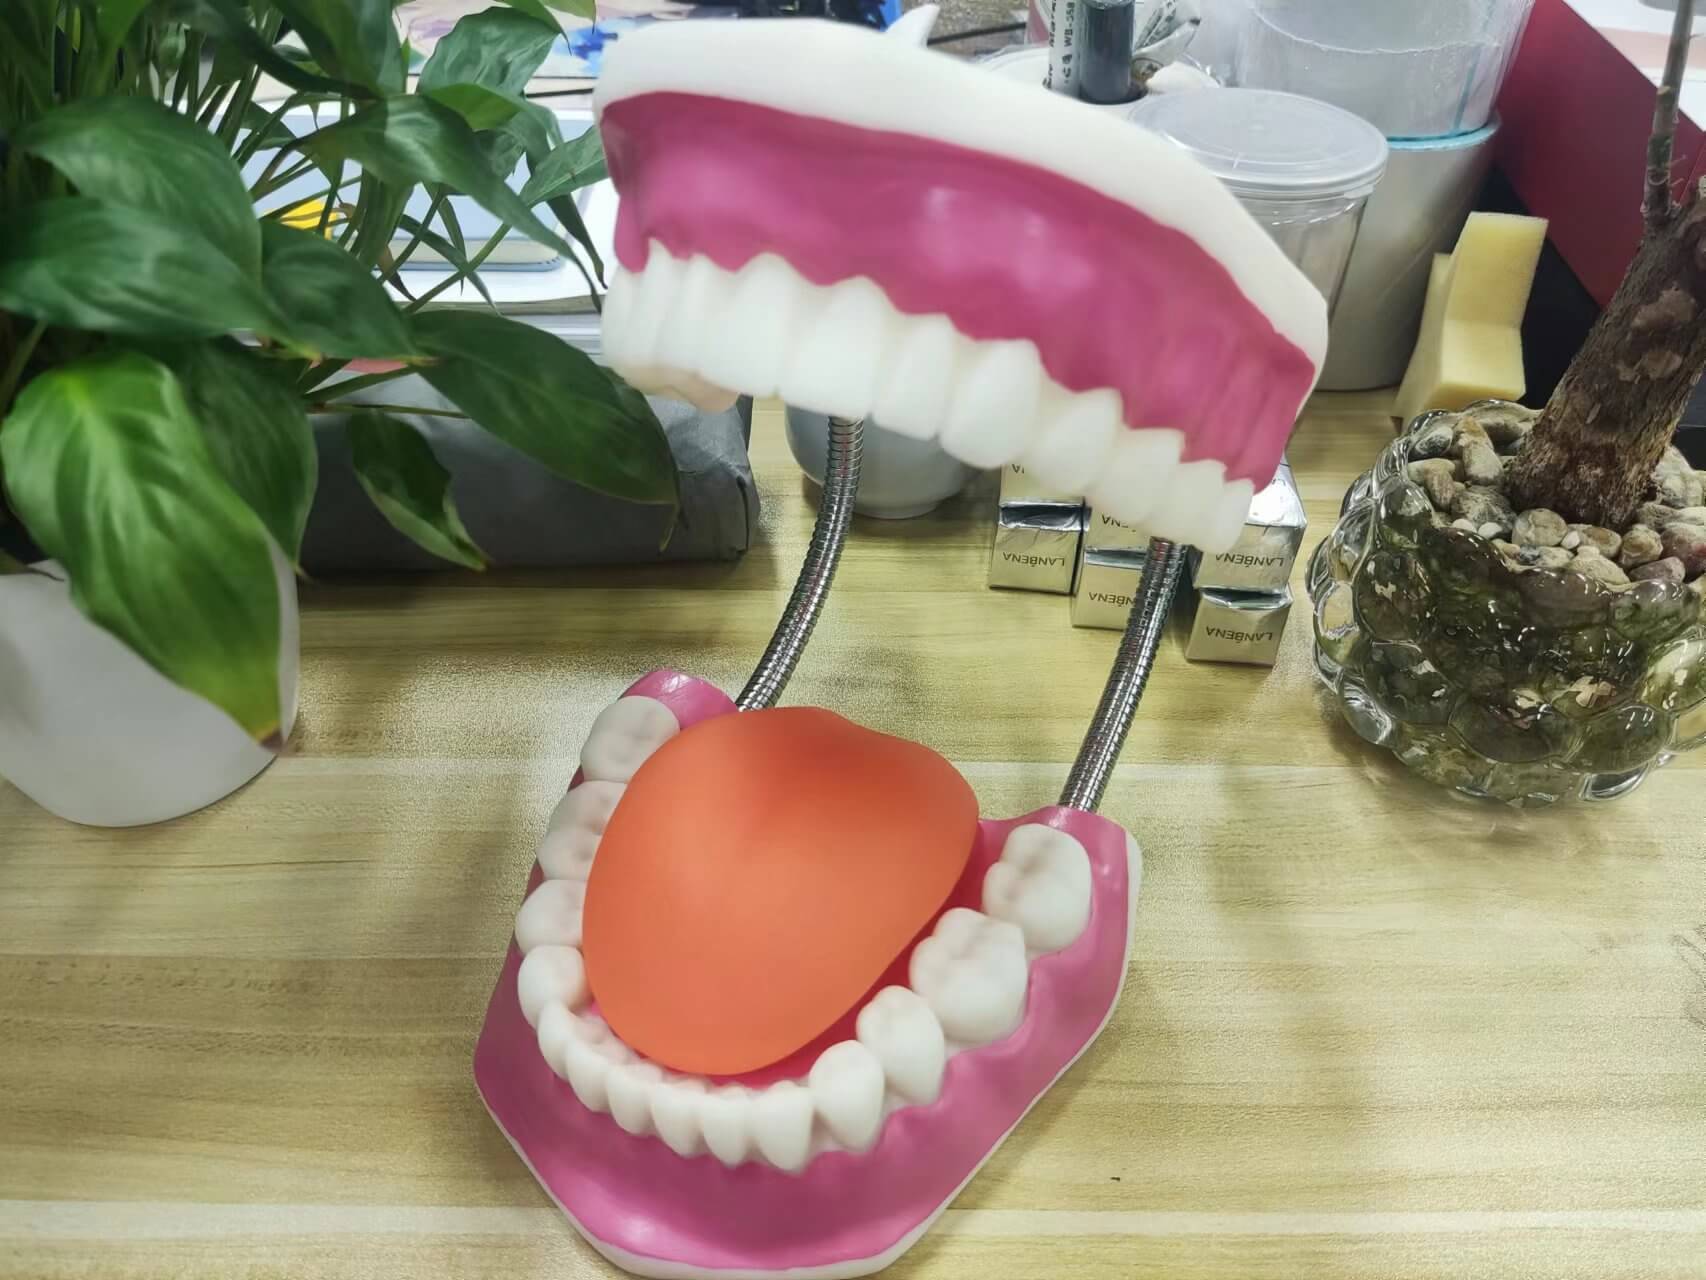 RONTEN Dental Tooth Brushing Model 6 Times Enlarged with Giant Brush